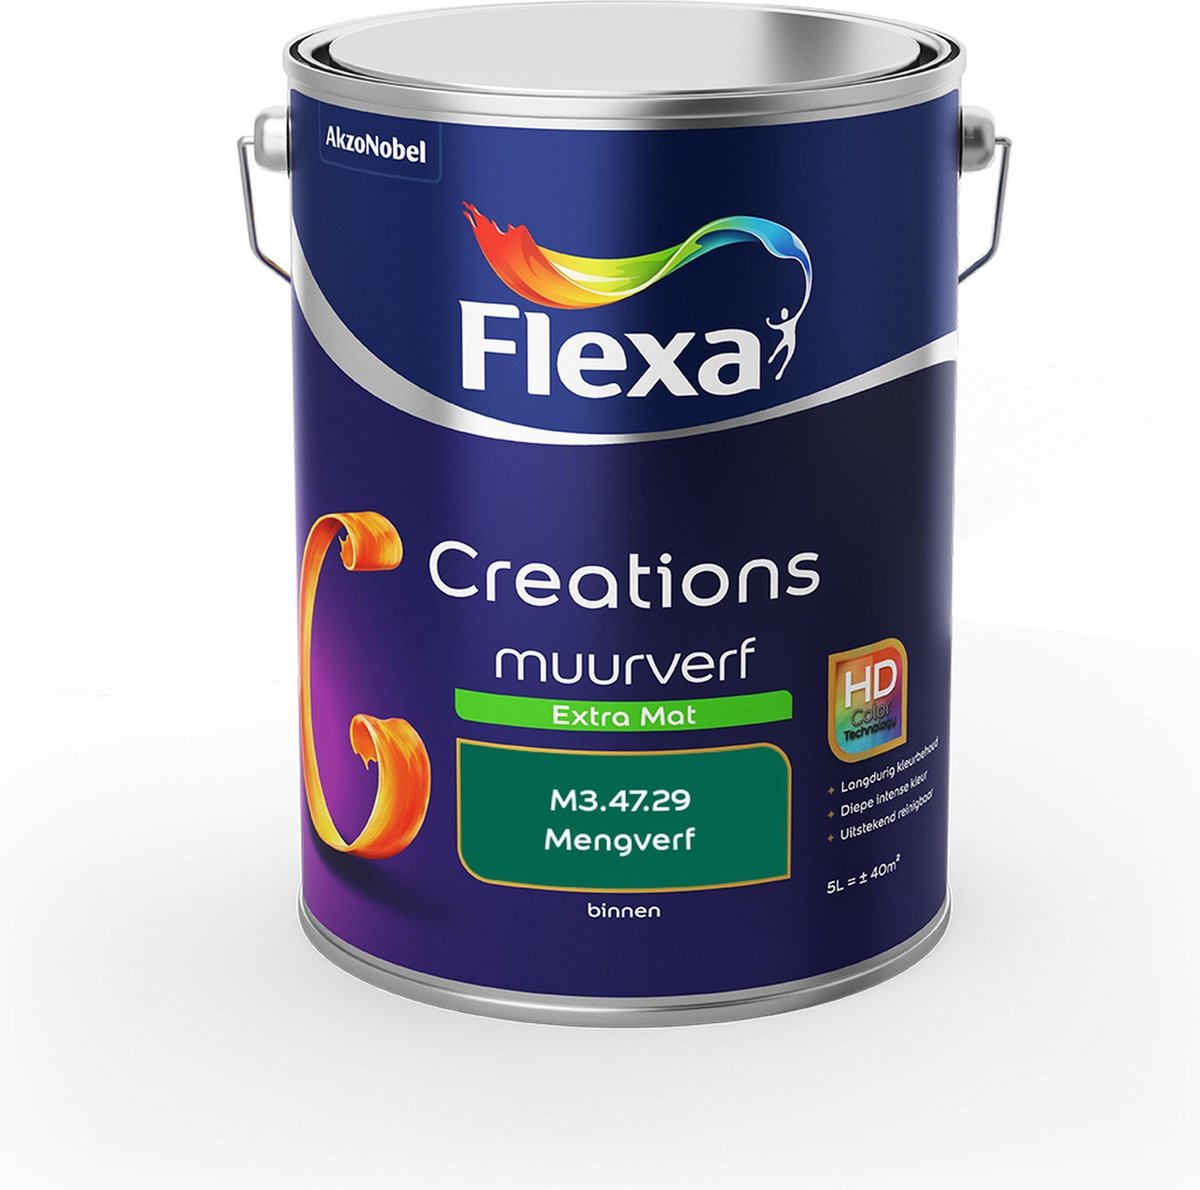 Flexa Creations Muurverf - Extra Mat - Colorfutures 2019 - M3.47.29 - 5 liter